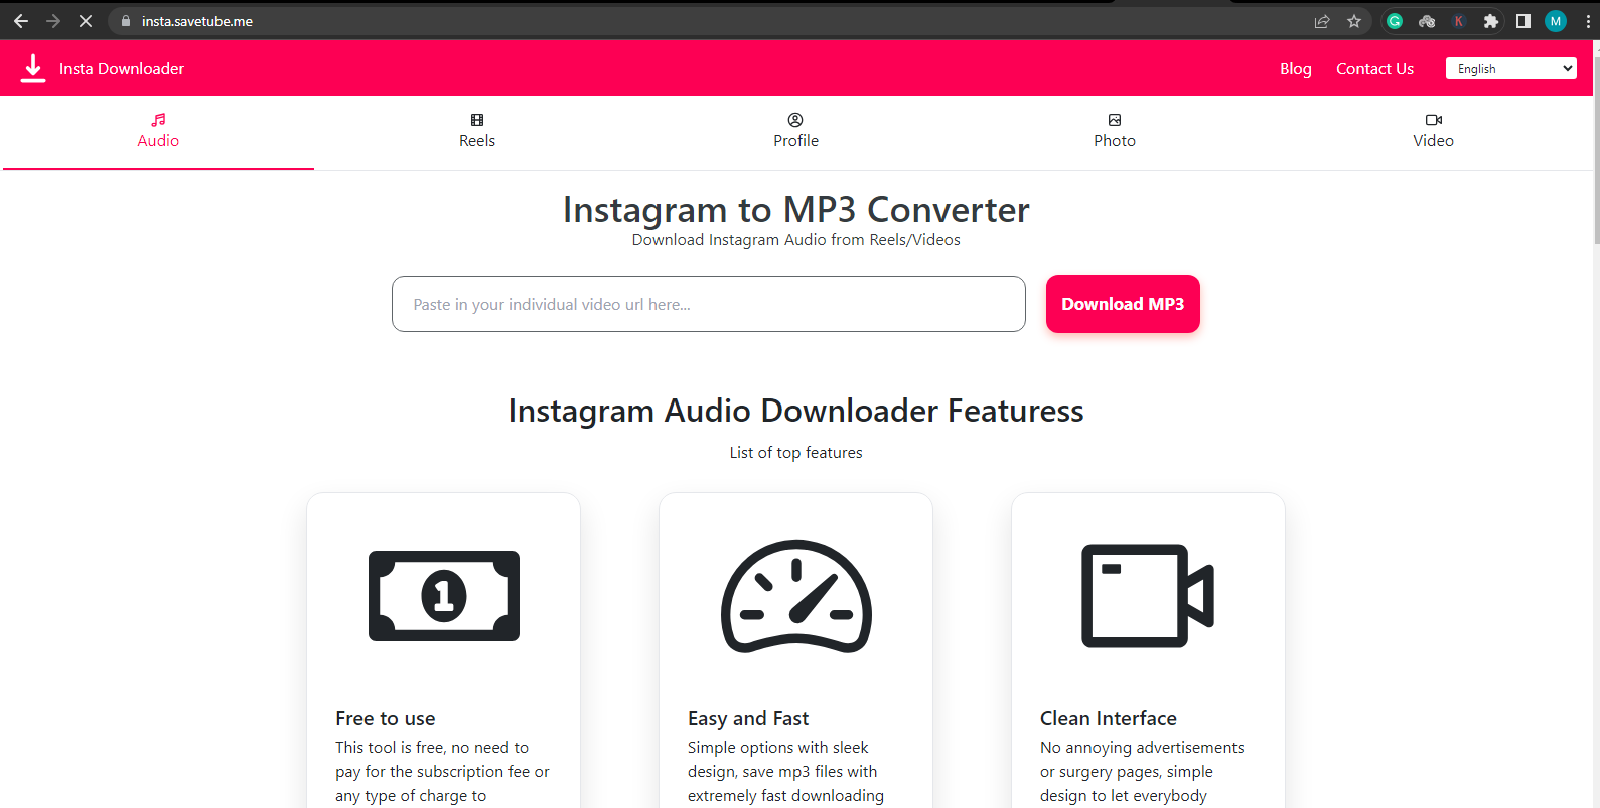 Insta.savetube.me: Instagram Audio Downloader